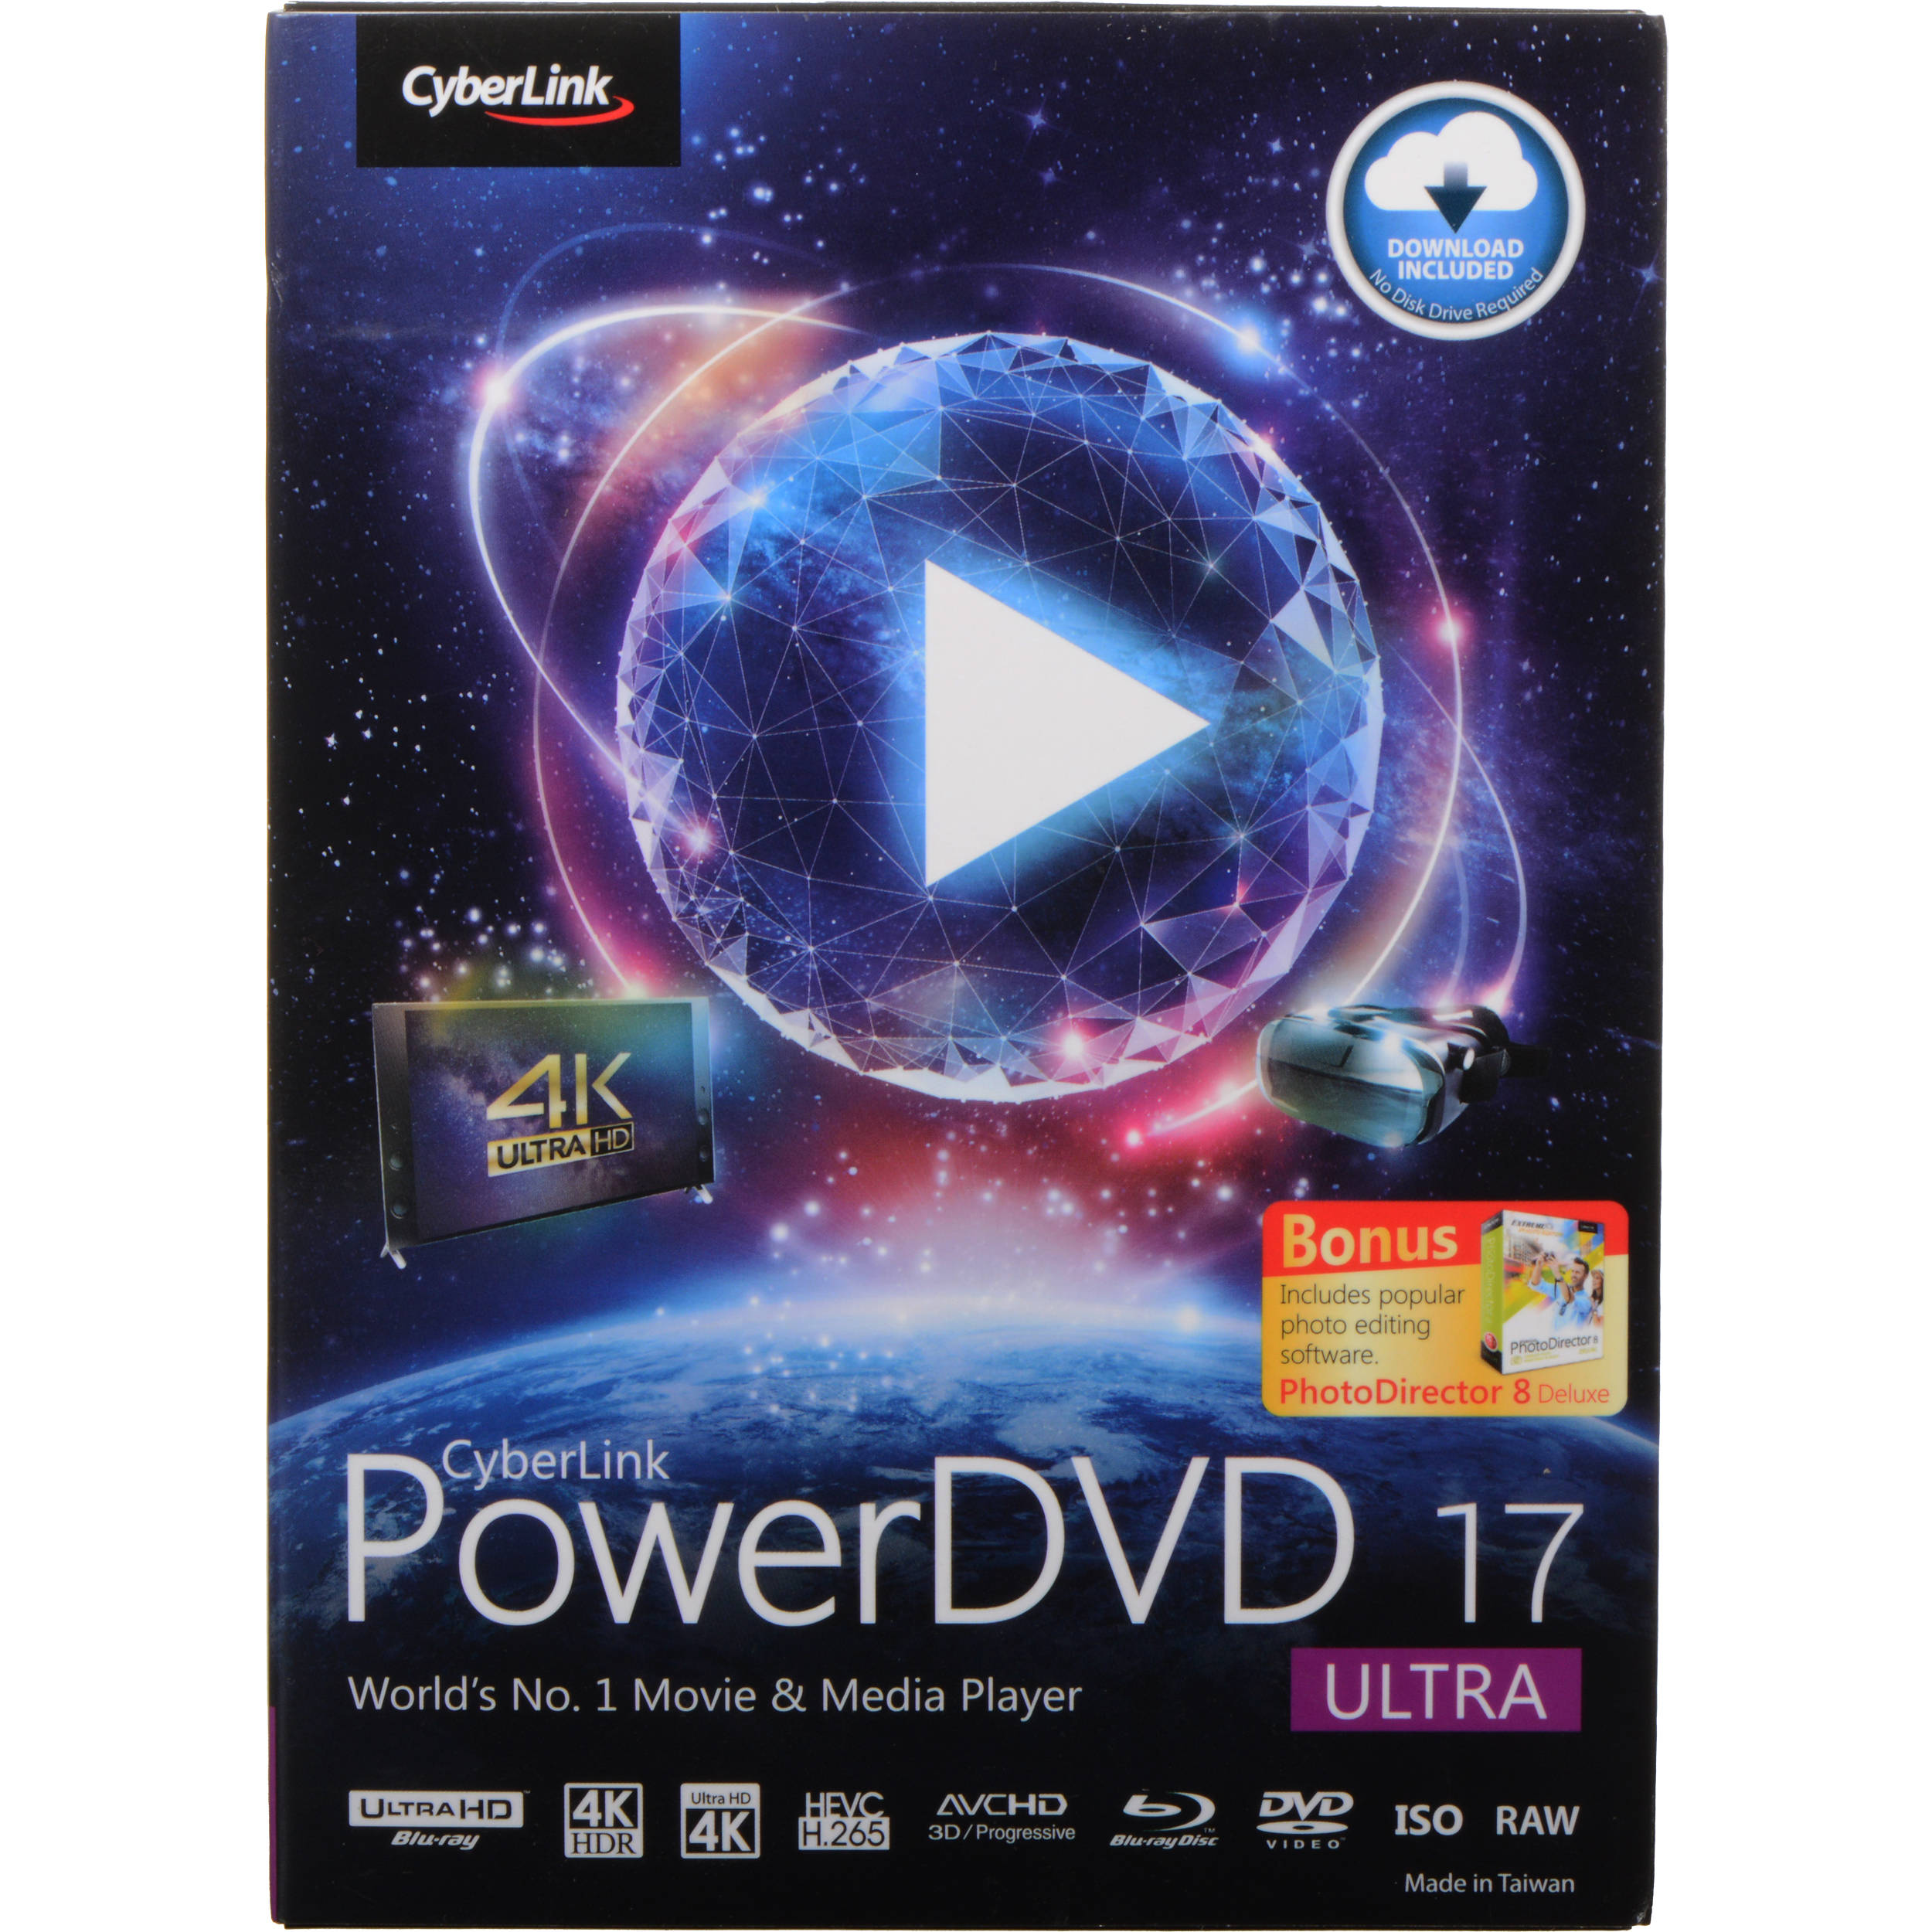 Cyberlink Powerdvd 17 Ultra Download Dvd 0h00 Iwu0 00 B H